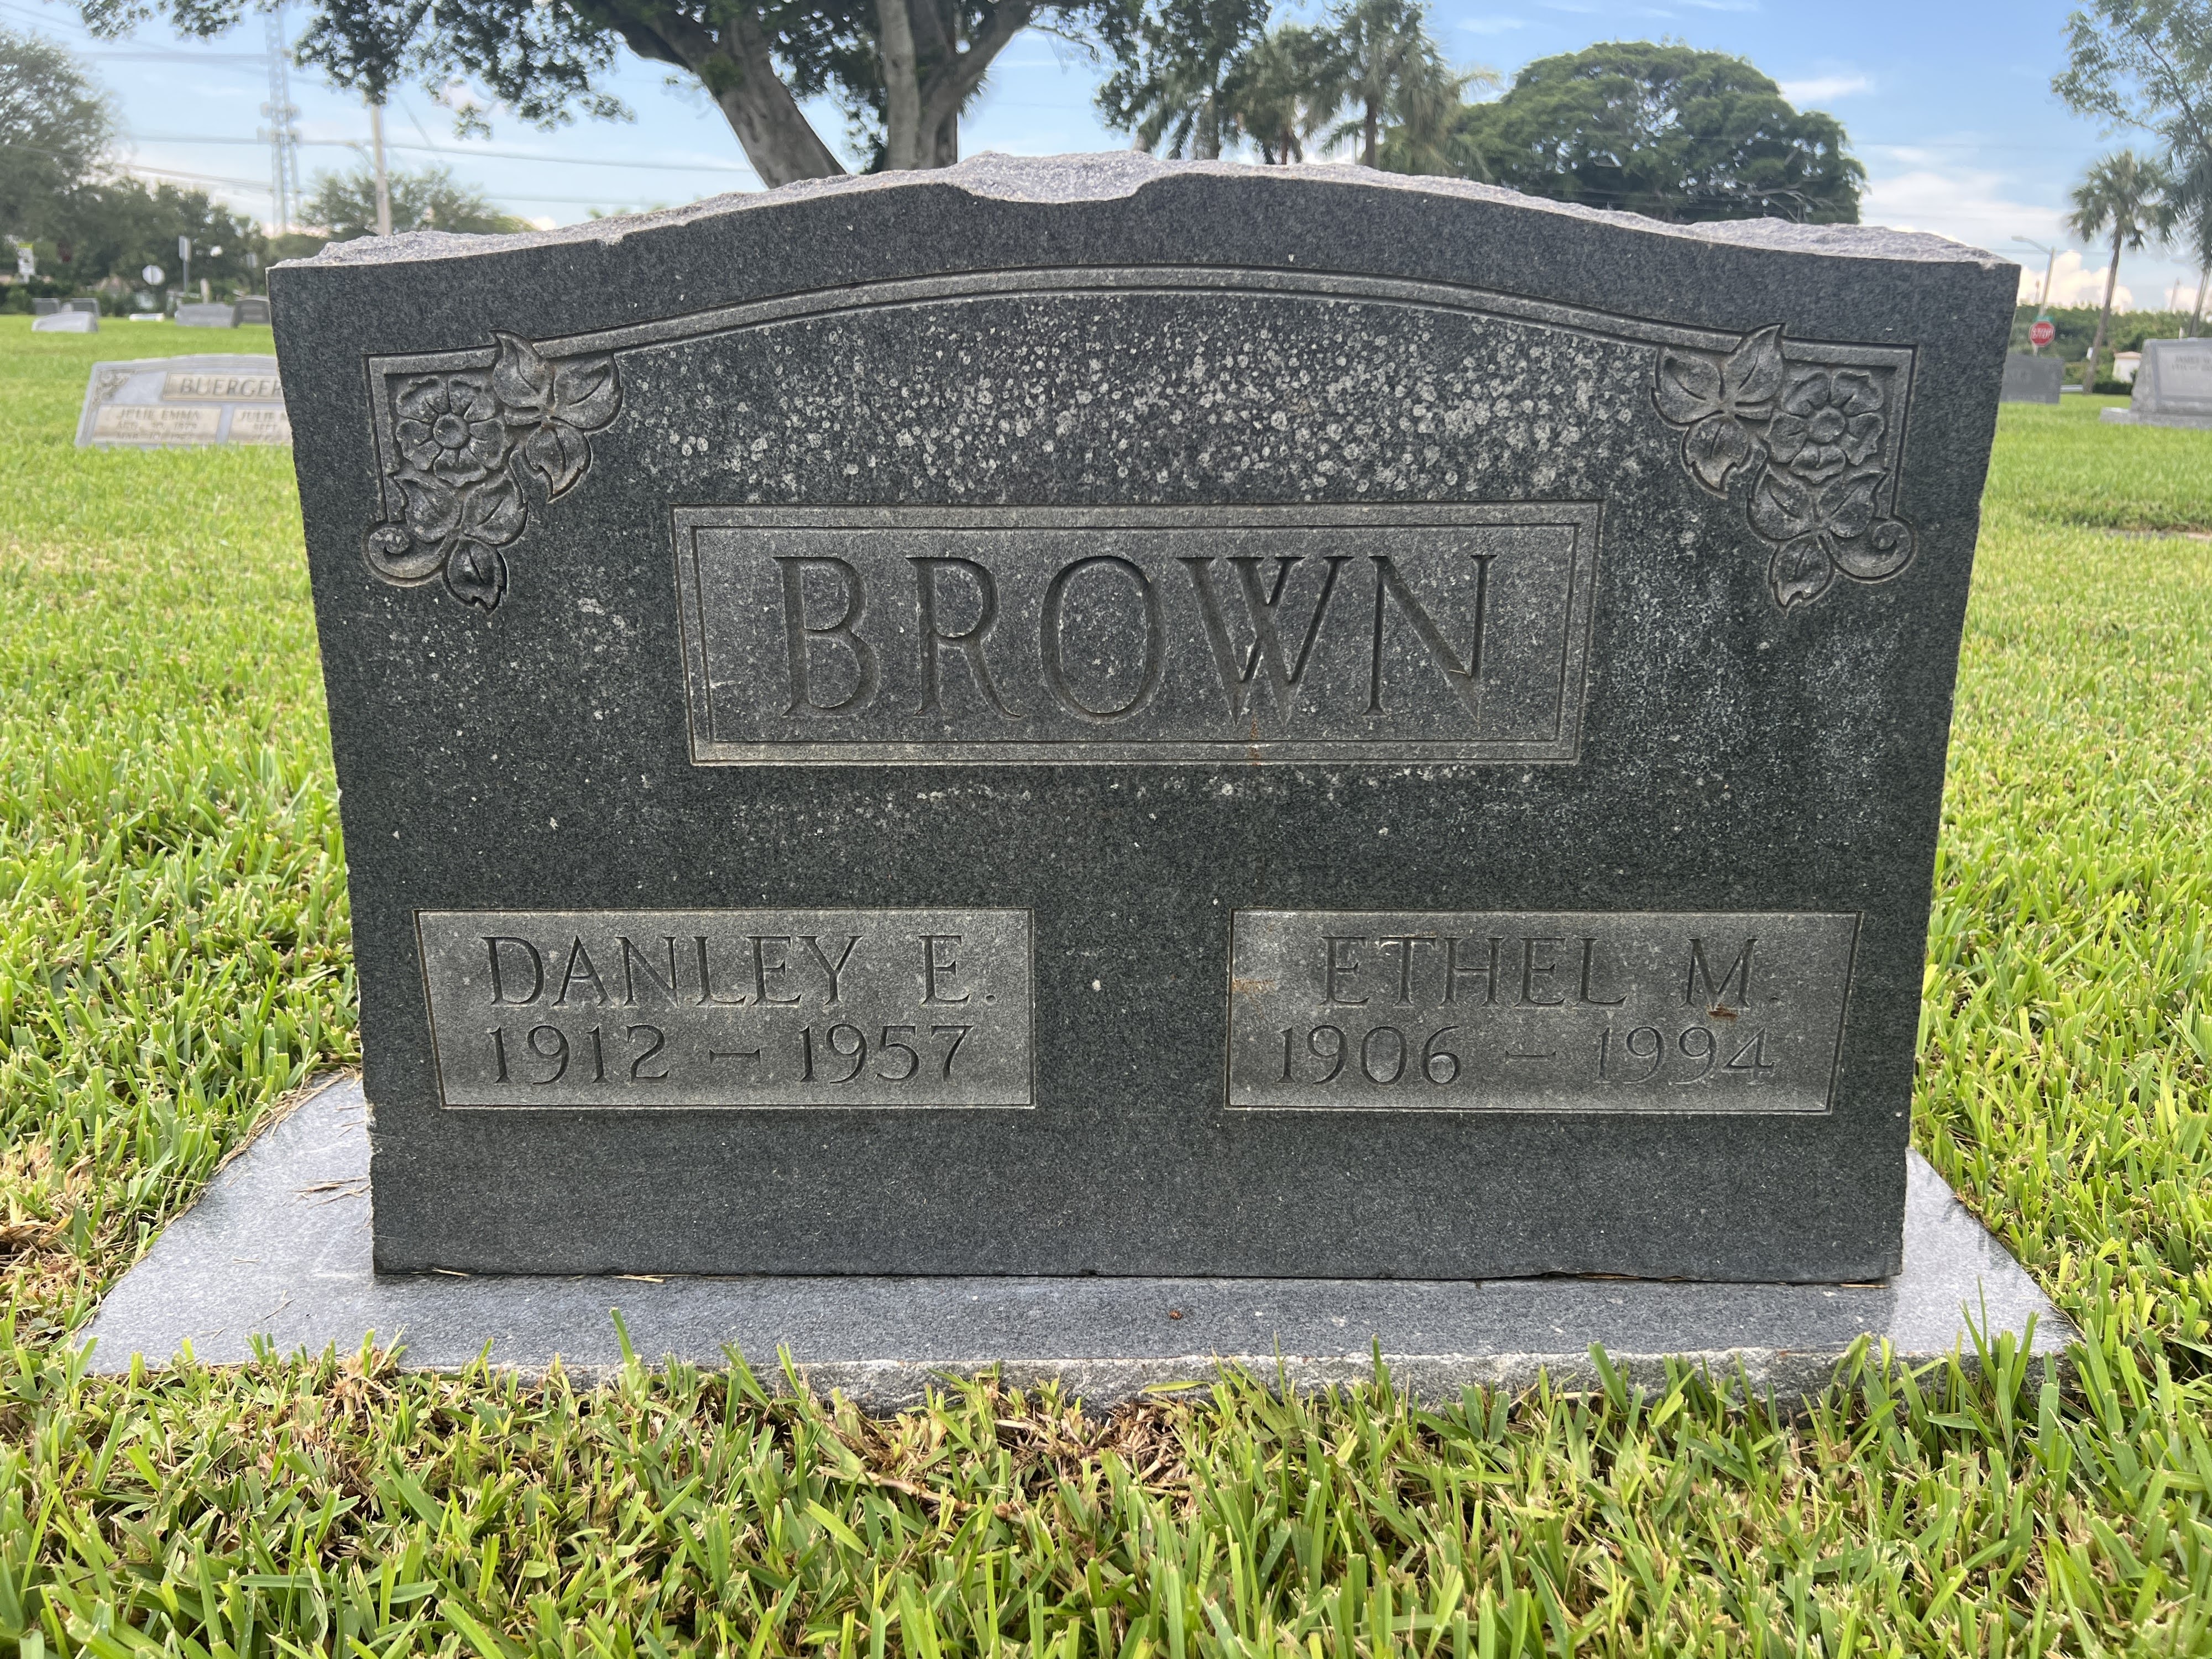 Ethel M Brown